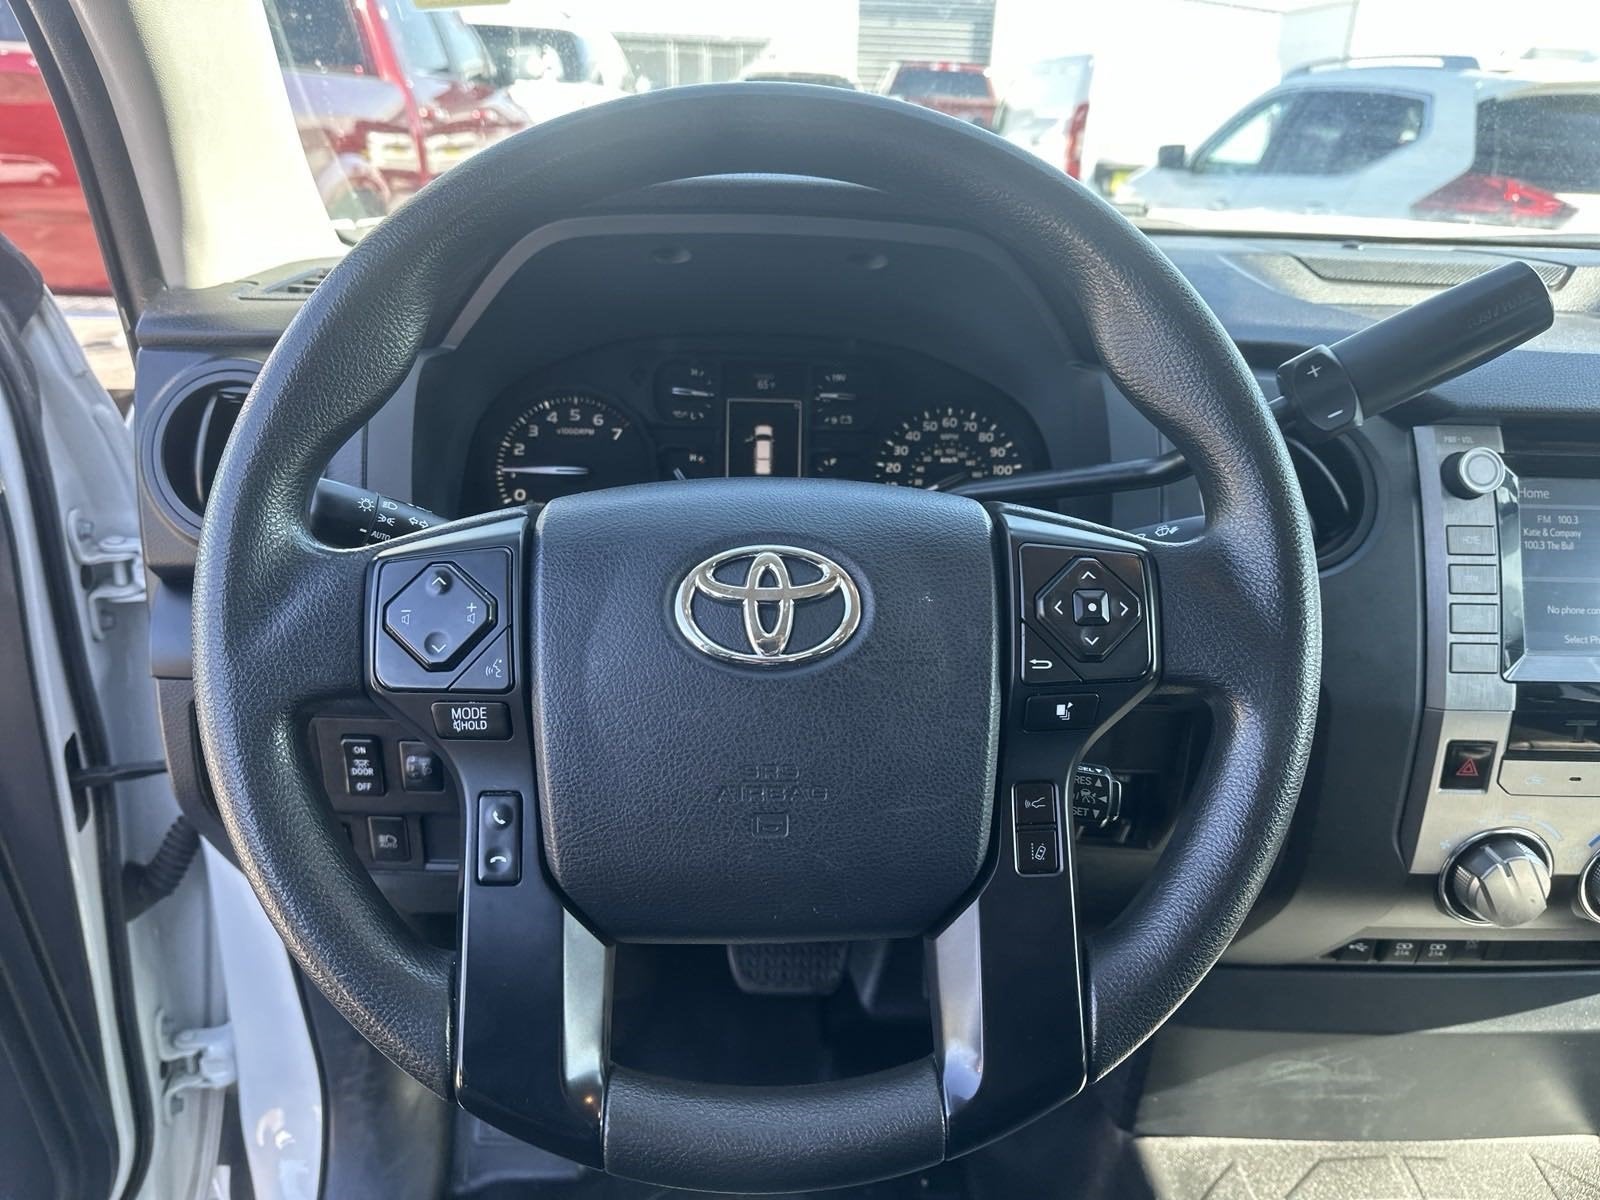 2020 Toyota Tundra SR